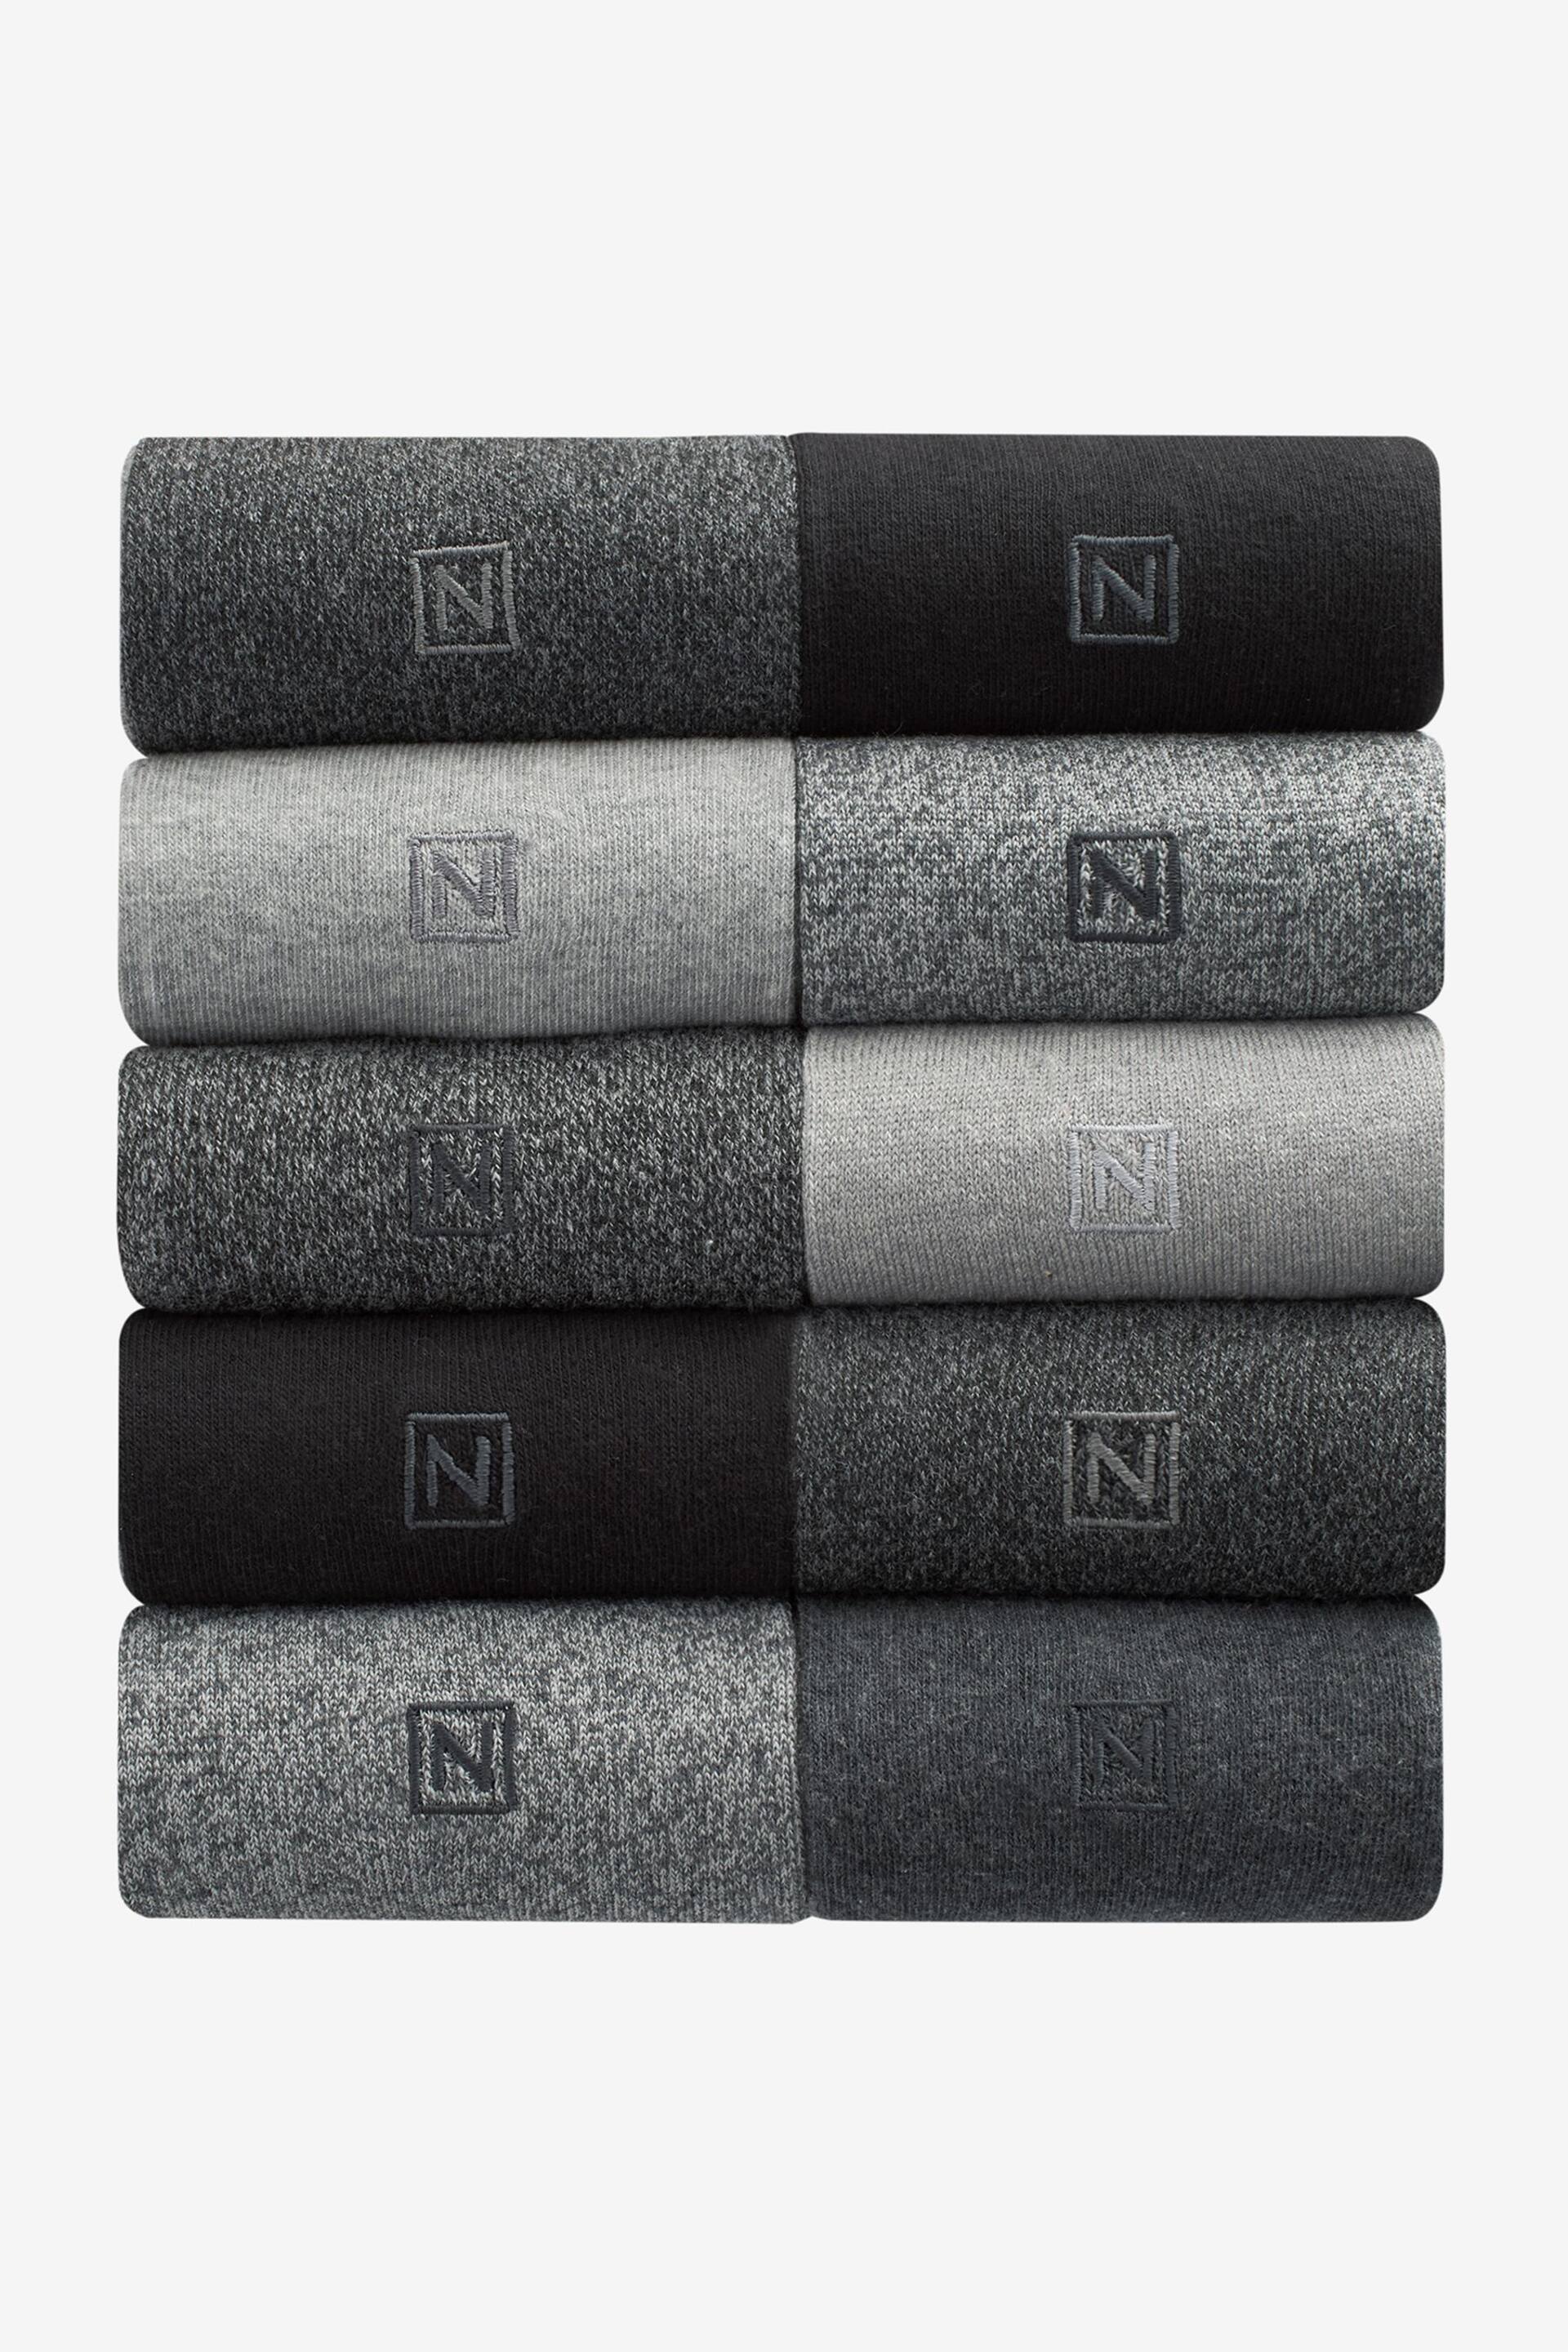 Black/Grey 10 Pack Embroidered Lasting Fresh Socks - Image 1 of 7